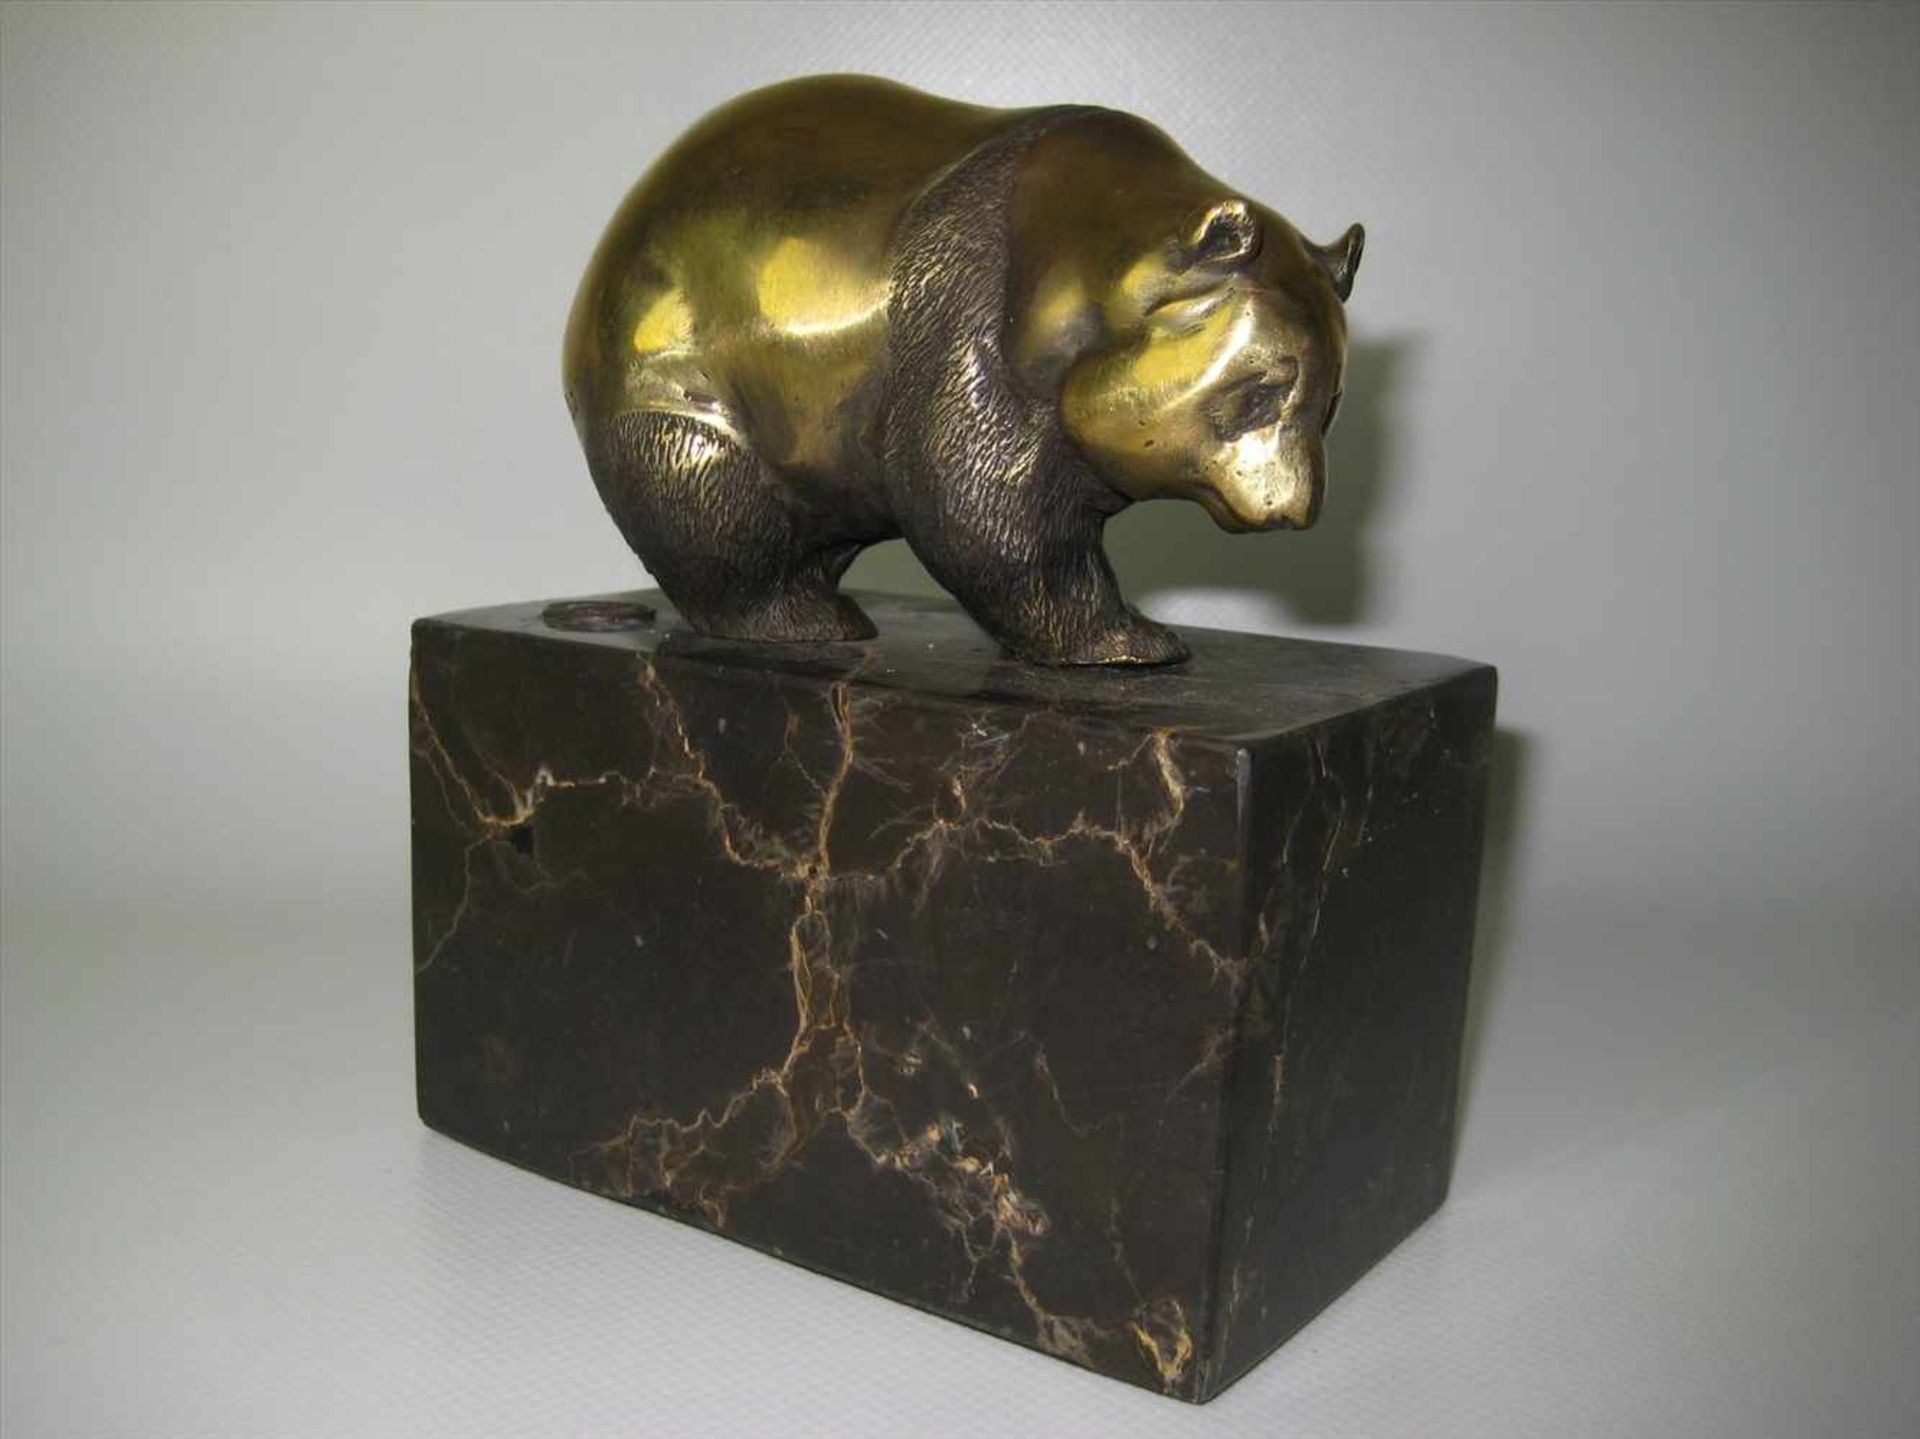 Schreitender Pandabär, Bronze patiniert, bez. "Milo", Gießerstempel, Marmorsockel, posthumer Guss,